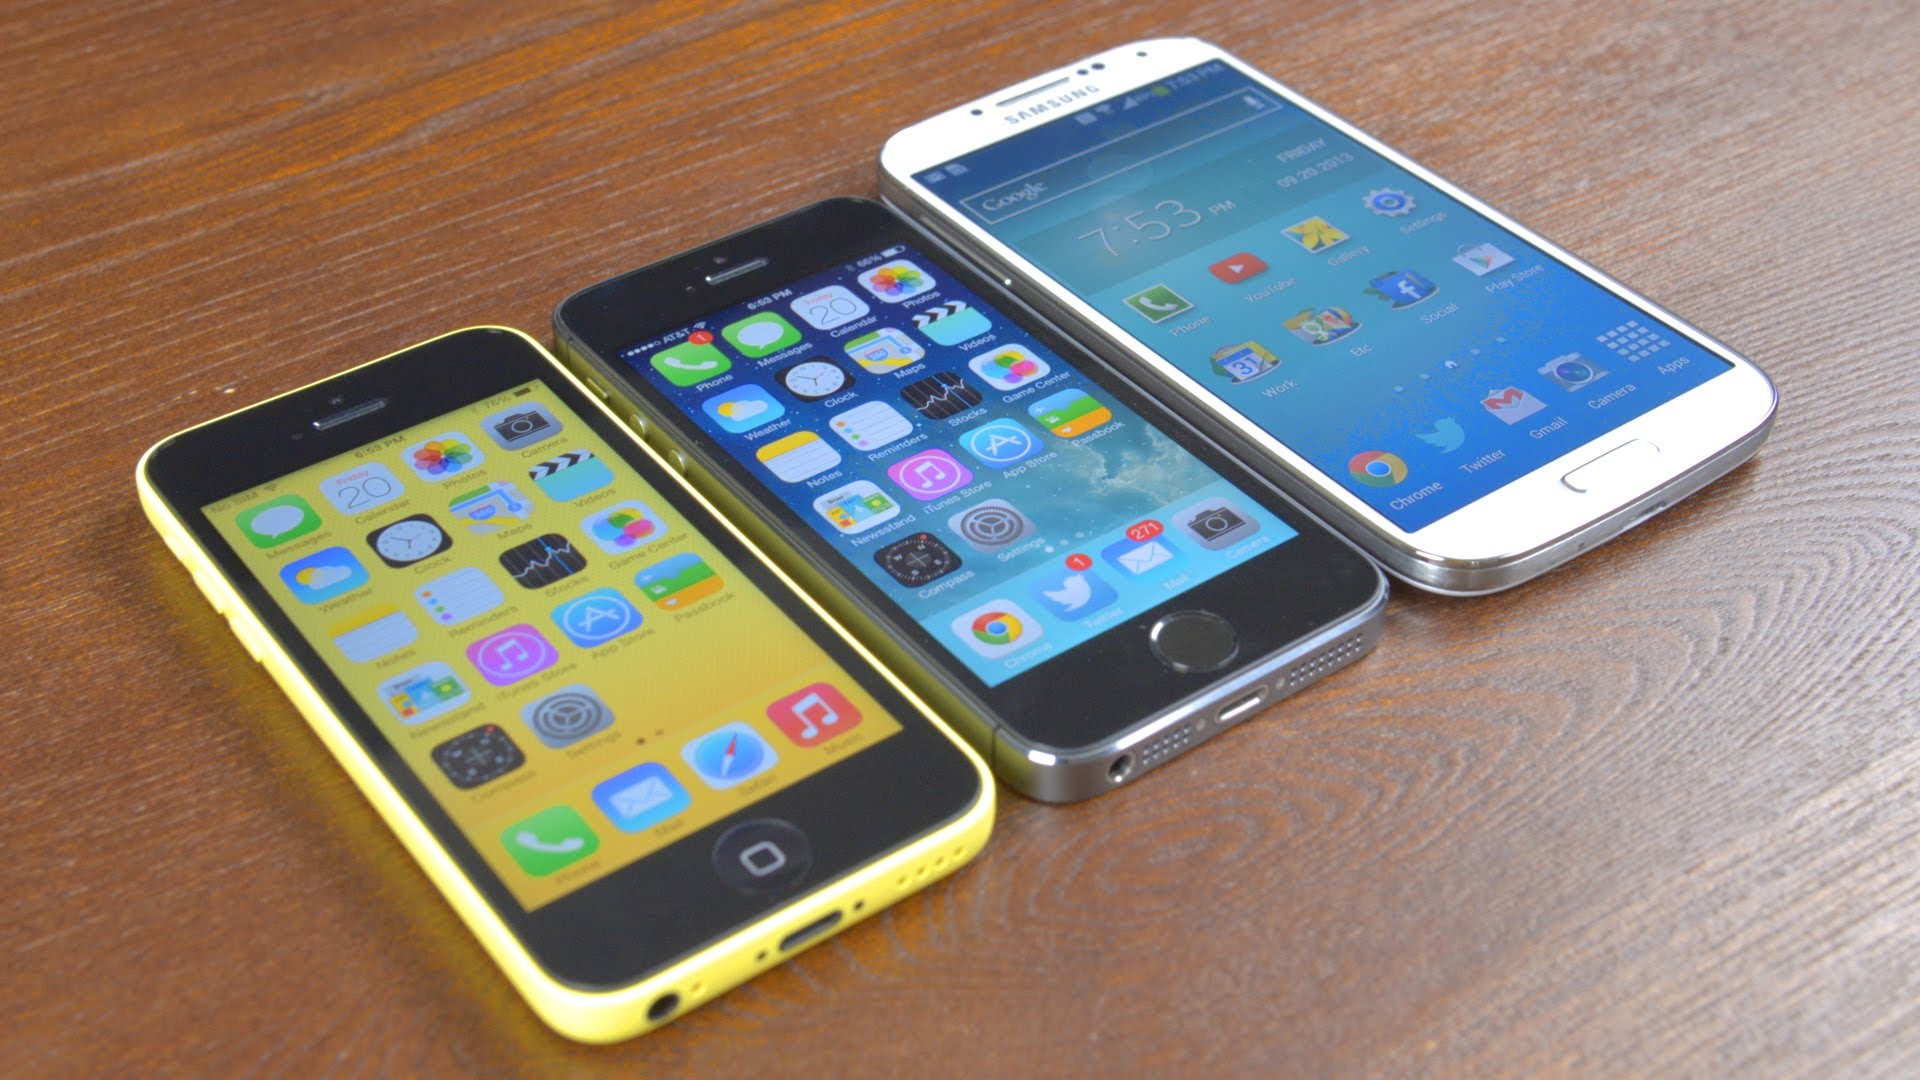 Galaxy iphone 5. Iphone s5 Mini. Iphone 5s Galaxy 5s. Iphone 5s Samsung s5 Mini. Айфон 5 самсунг.